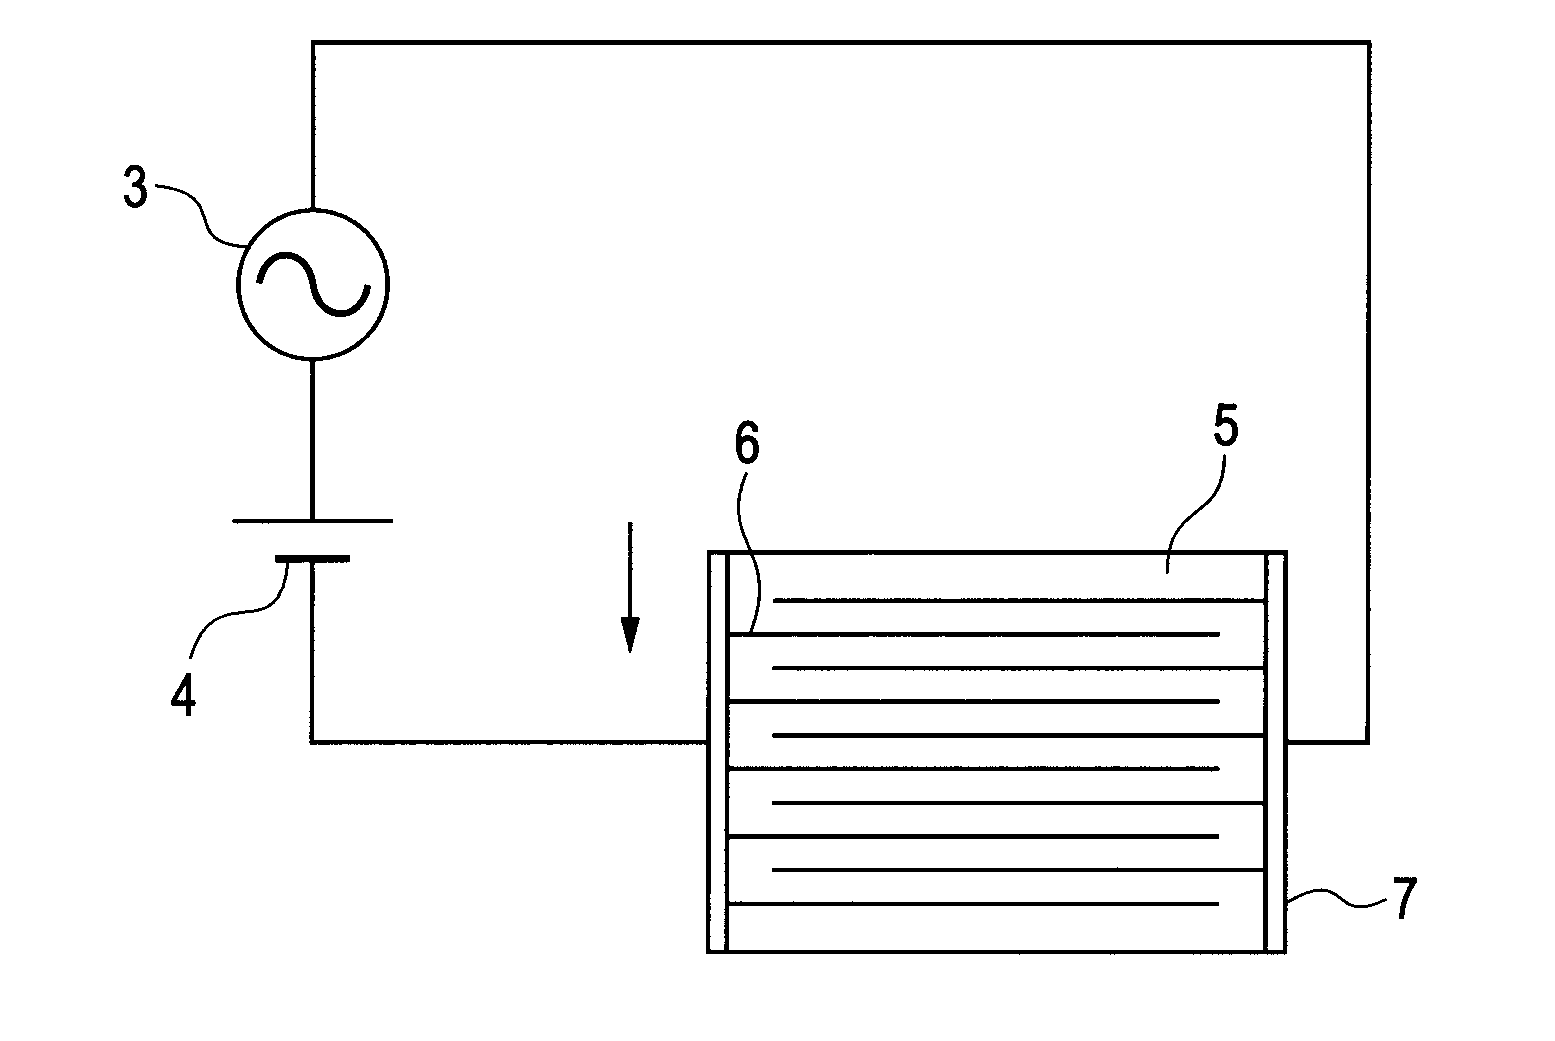 Method of driving piezoelectric device